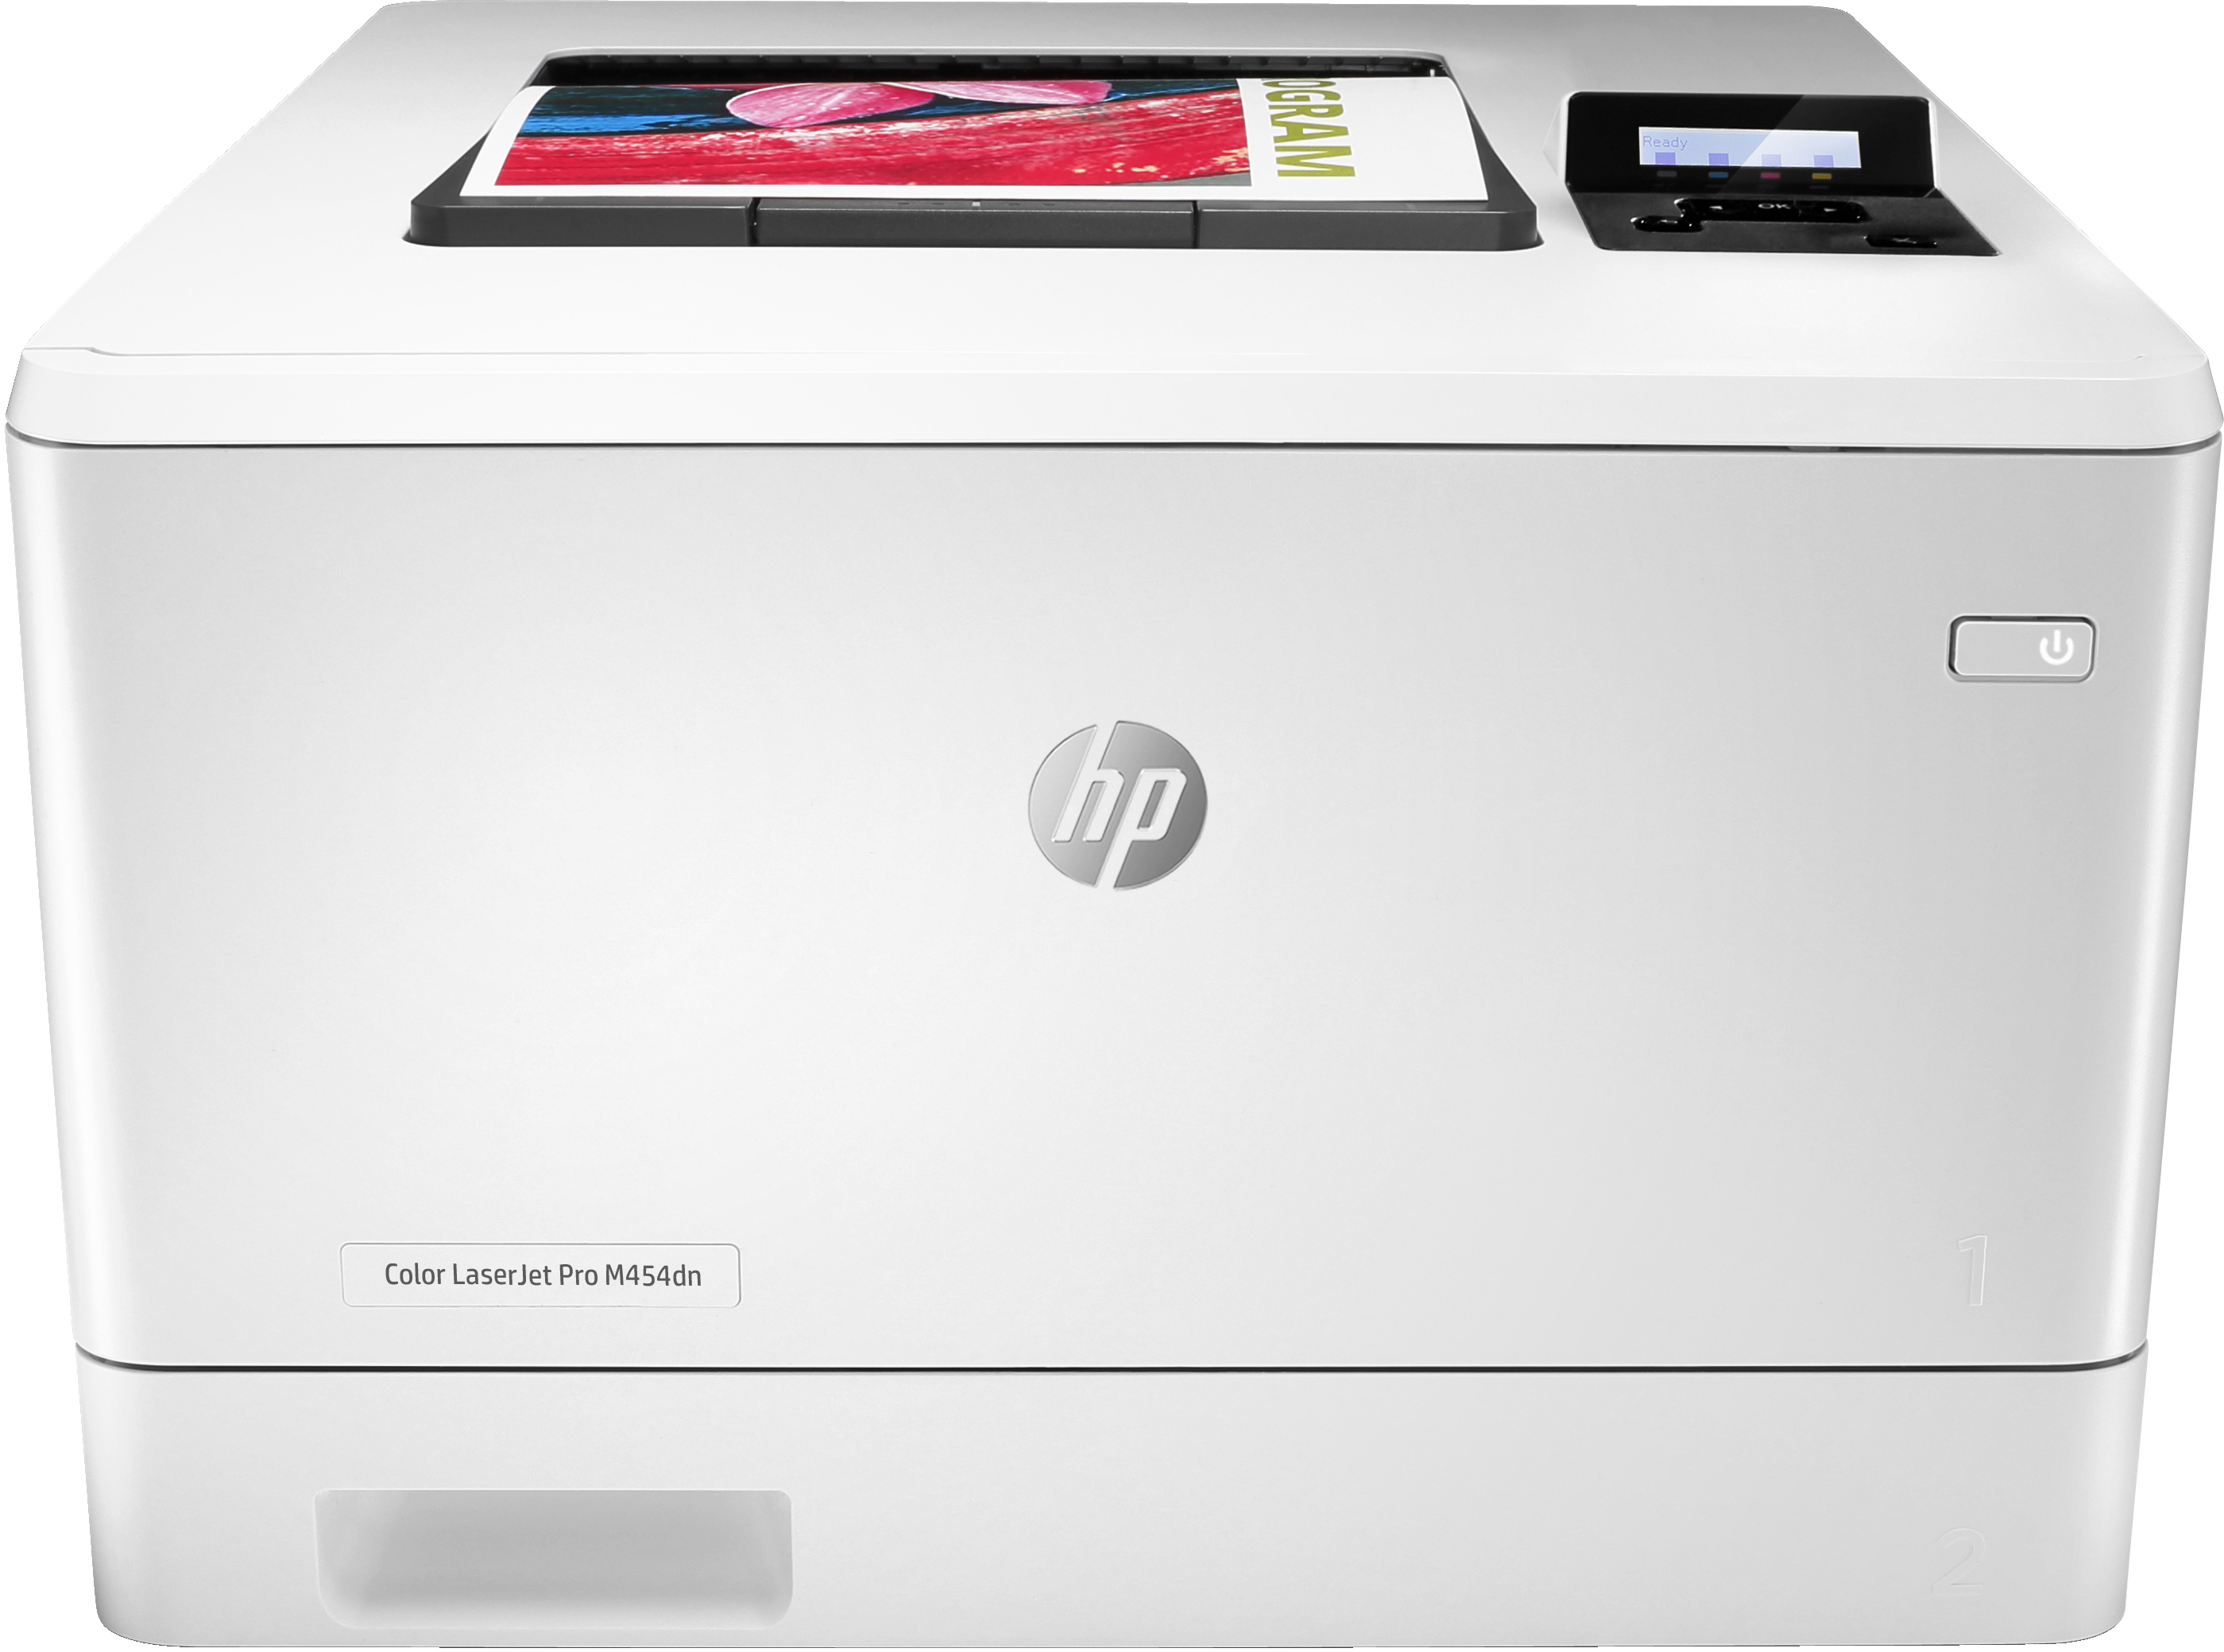 HP HP Color LaserJet Pro M454dn, Print, Dubbelzijdig printen